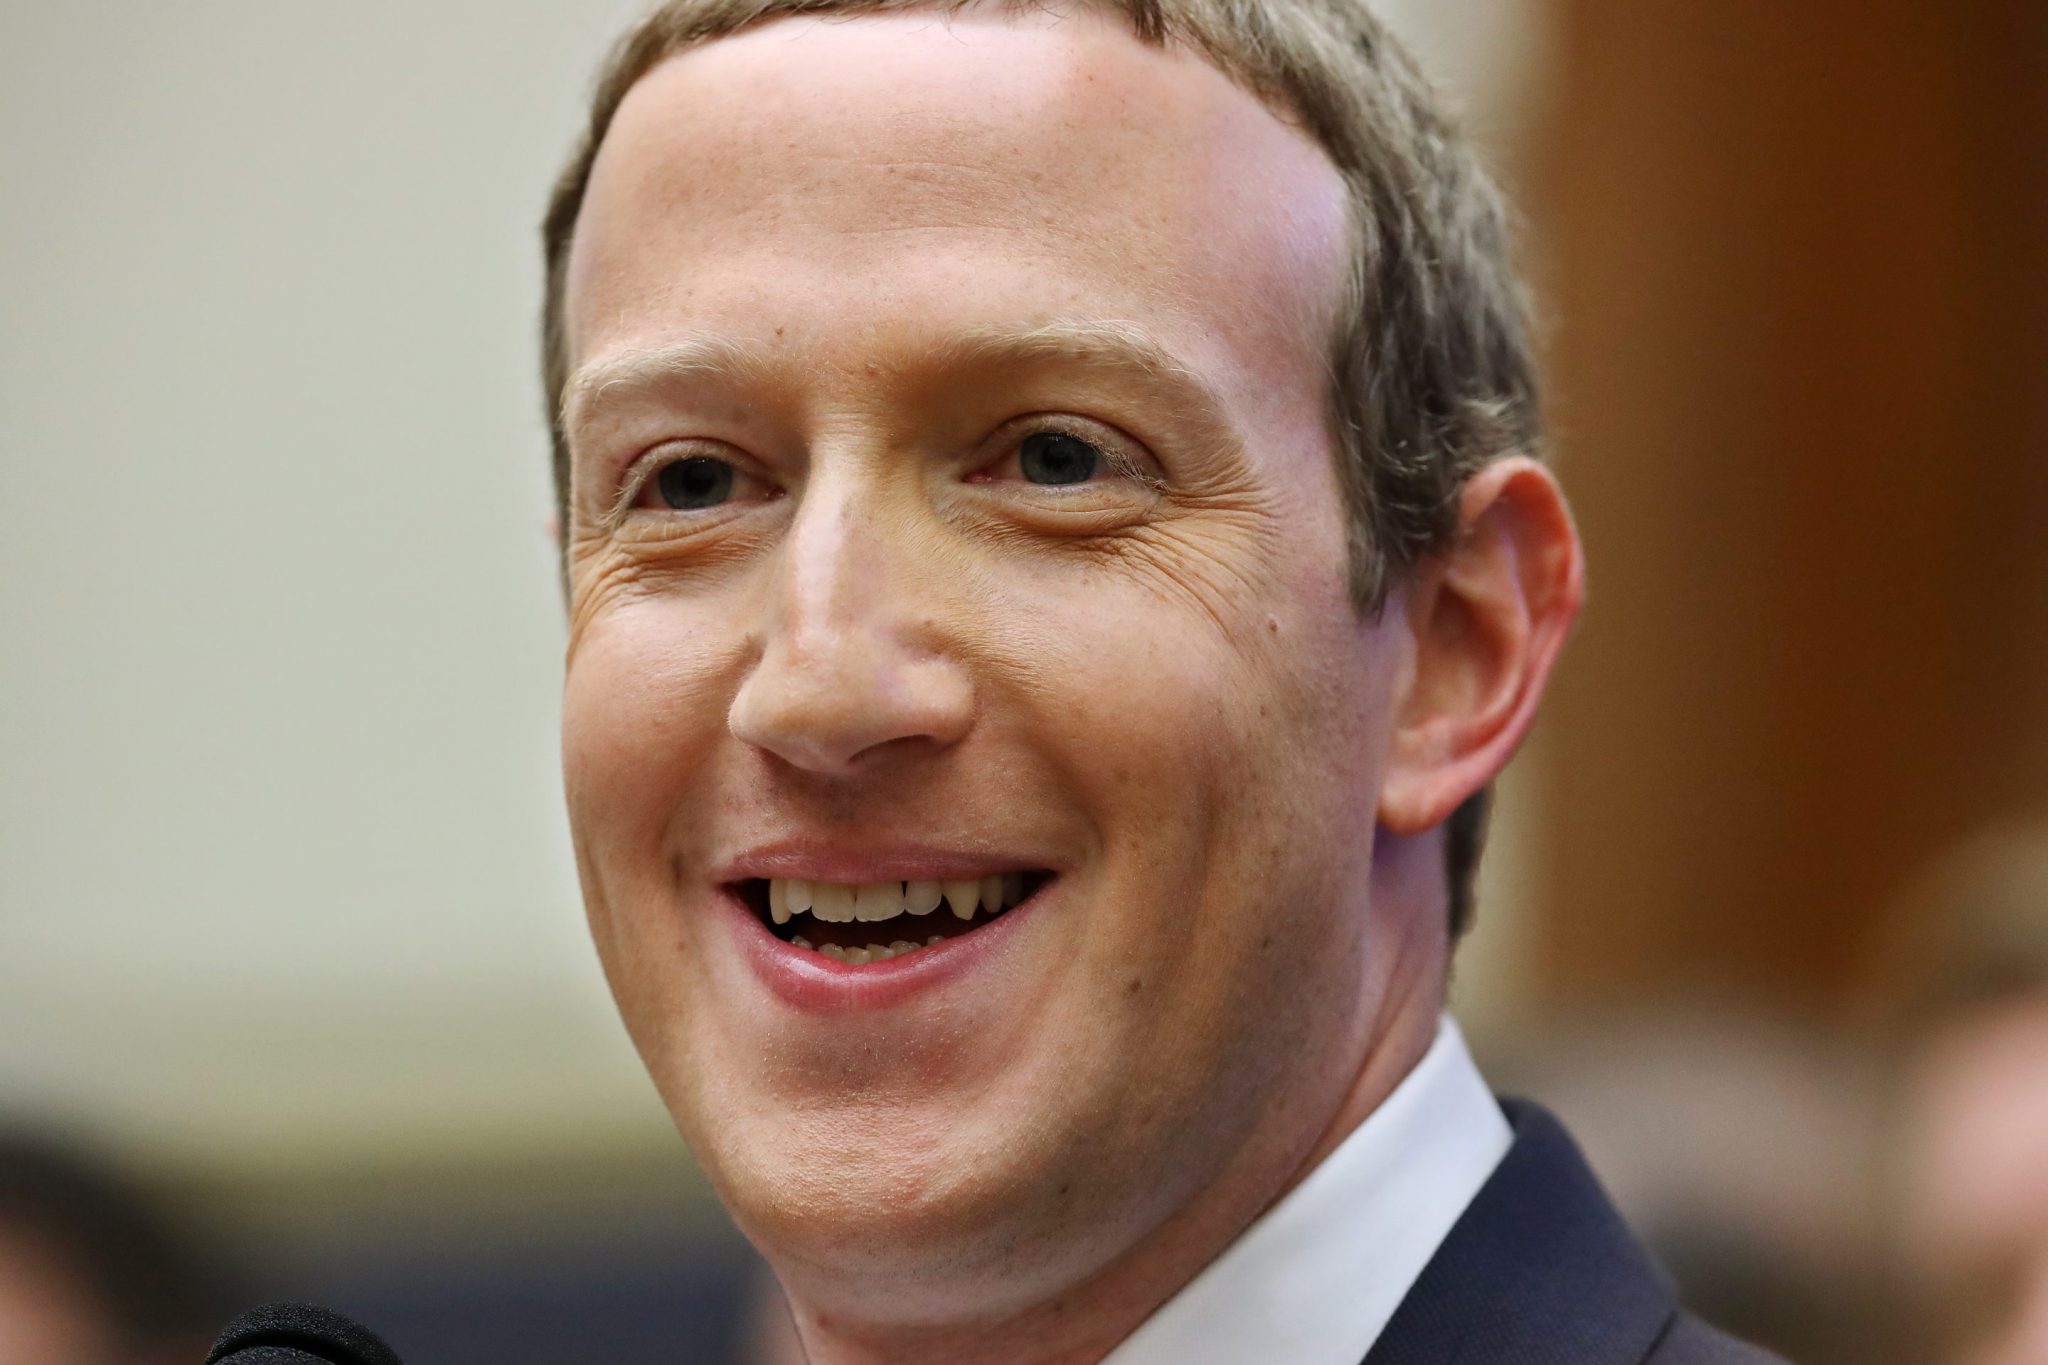 Meta CEO Mark Zuckerberg to earn $700 million in new dividend program